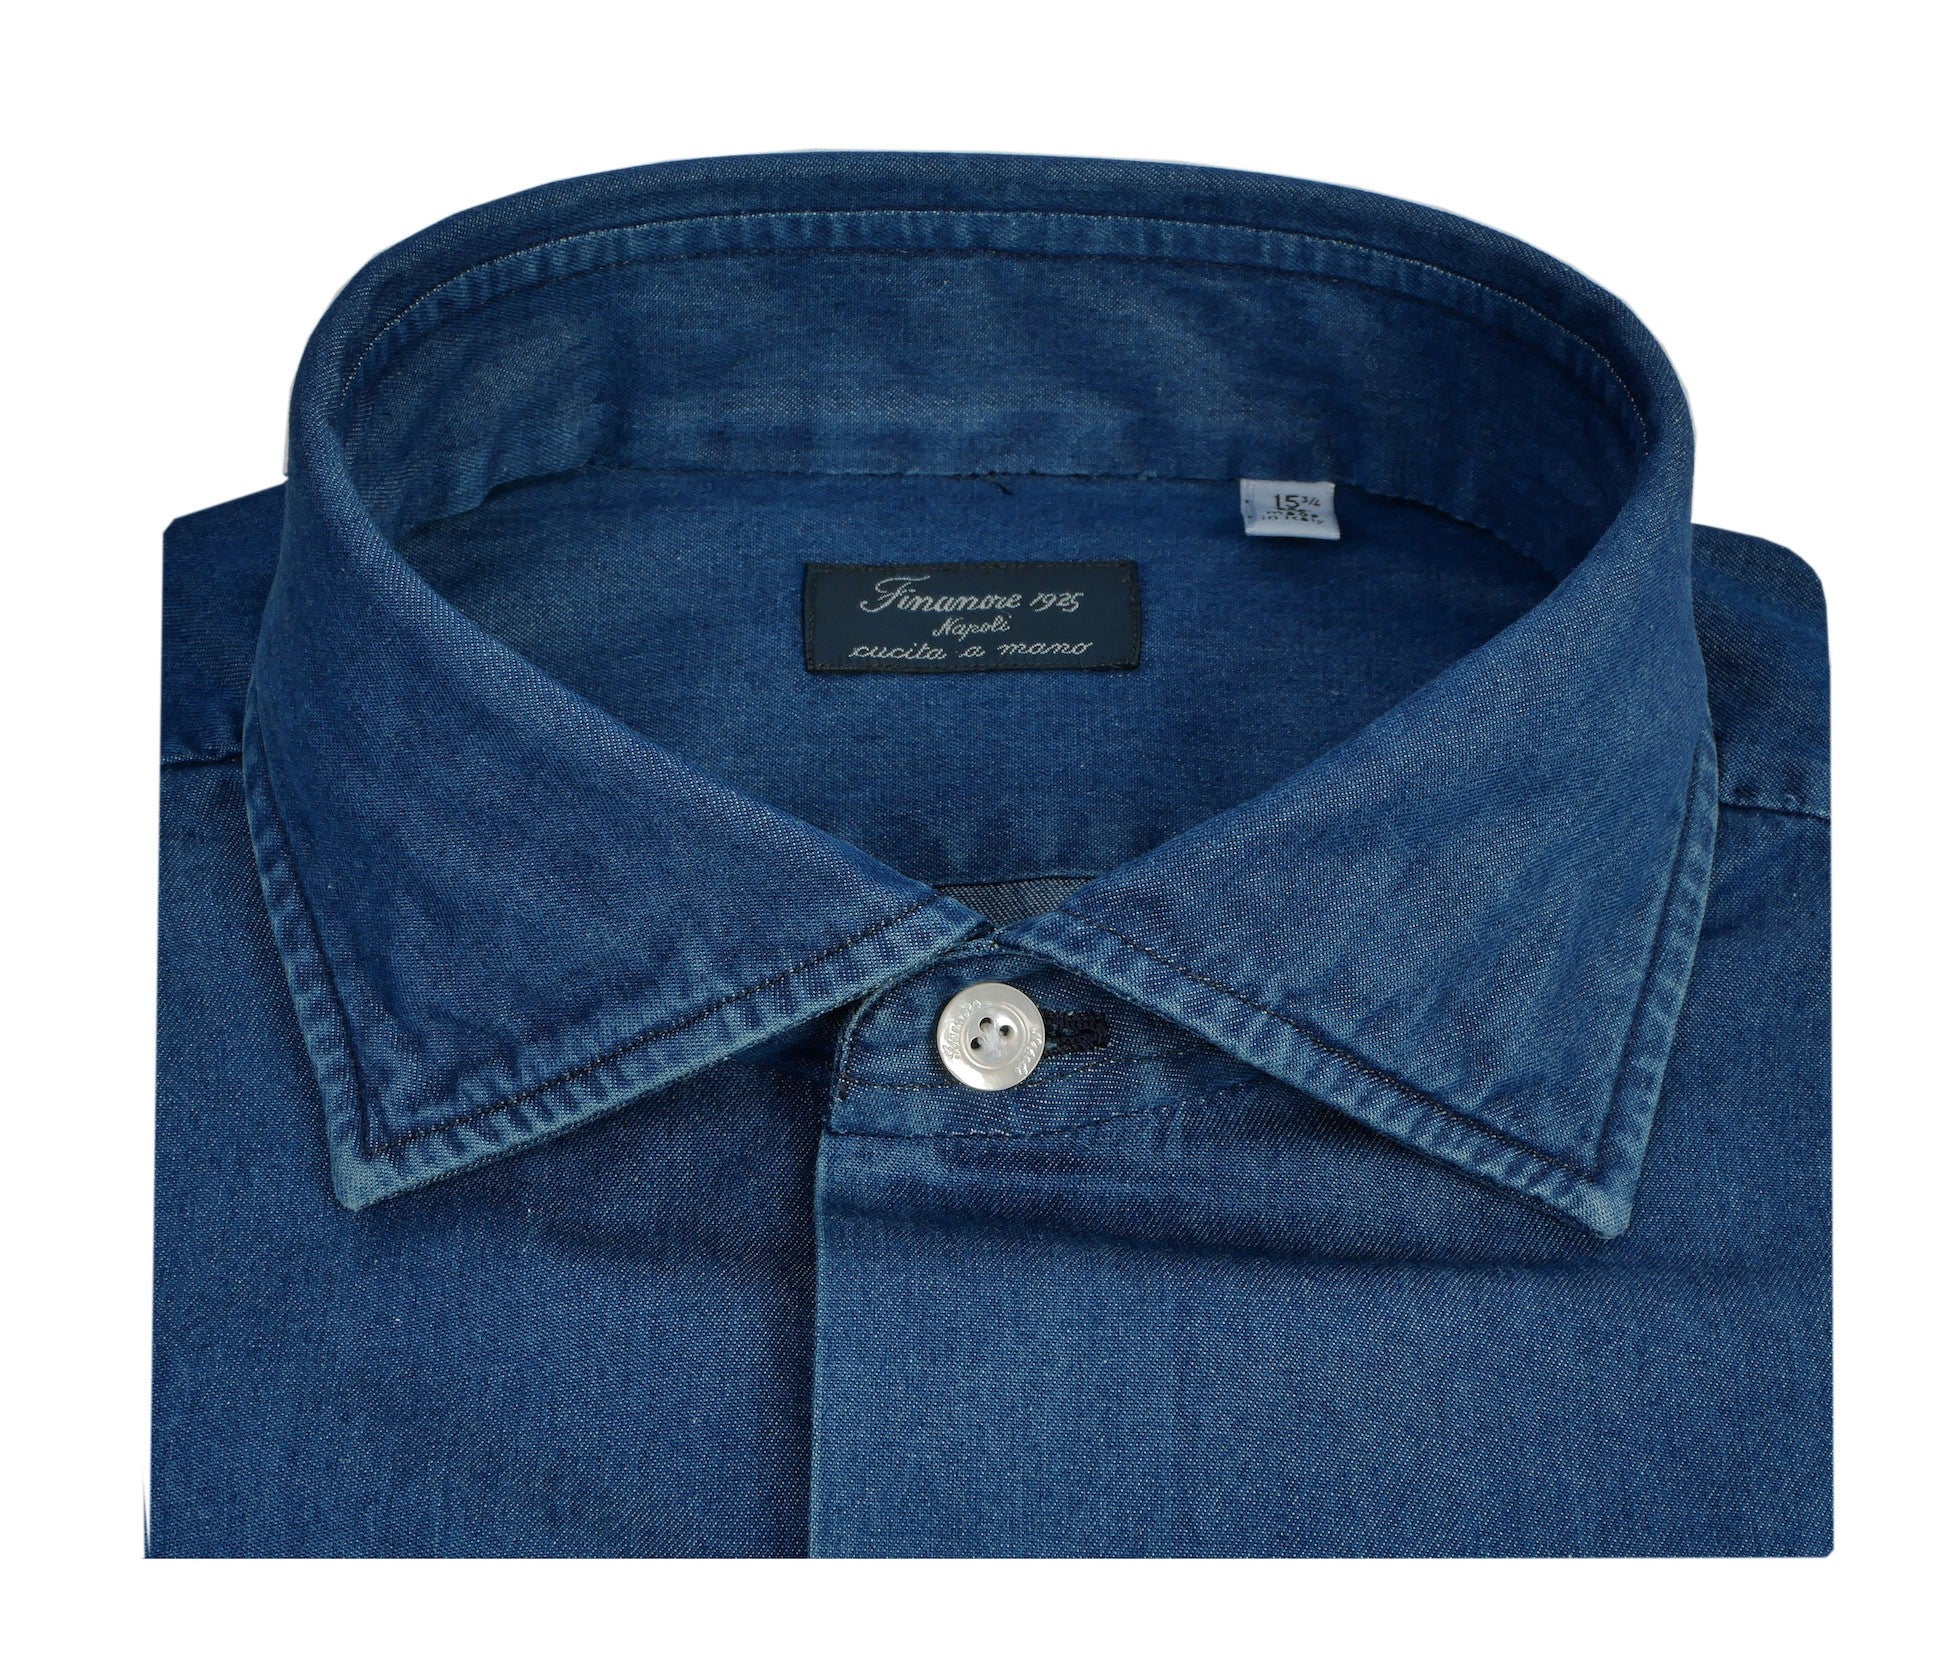 Tailored shirt in stone washed denim, Milan line